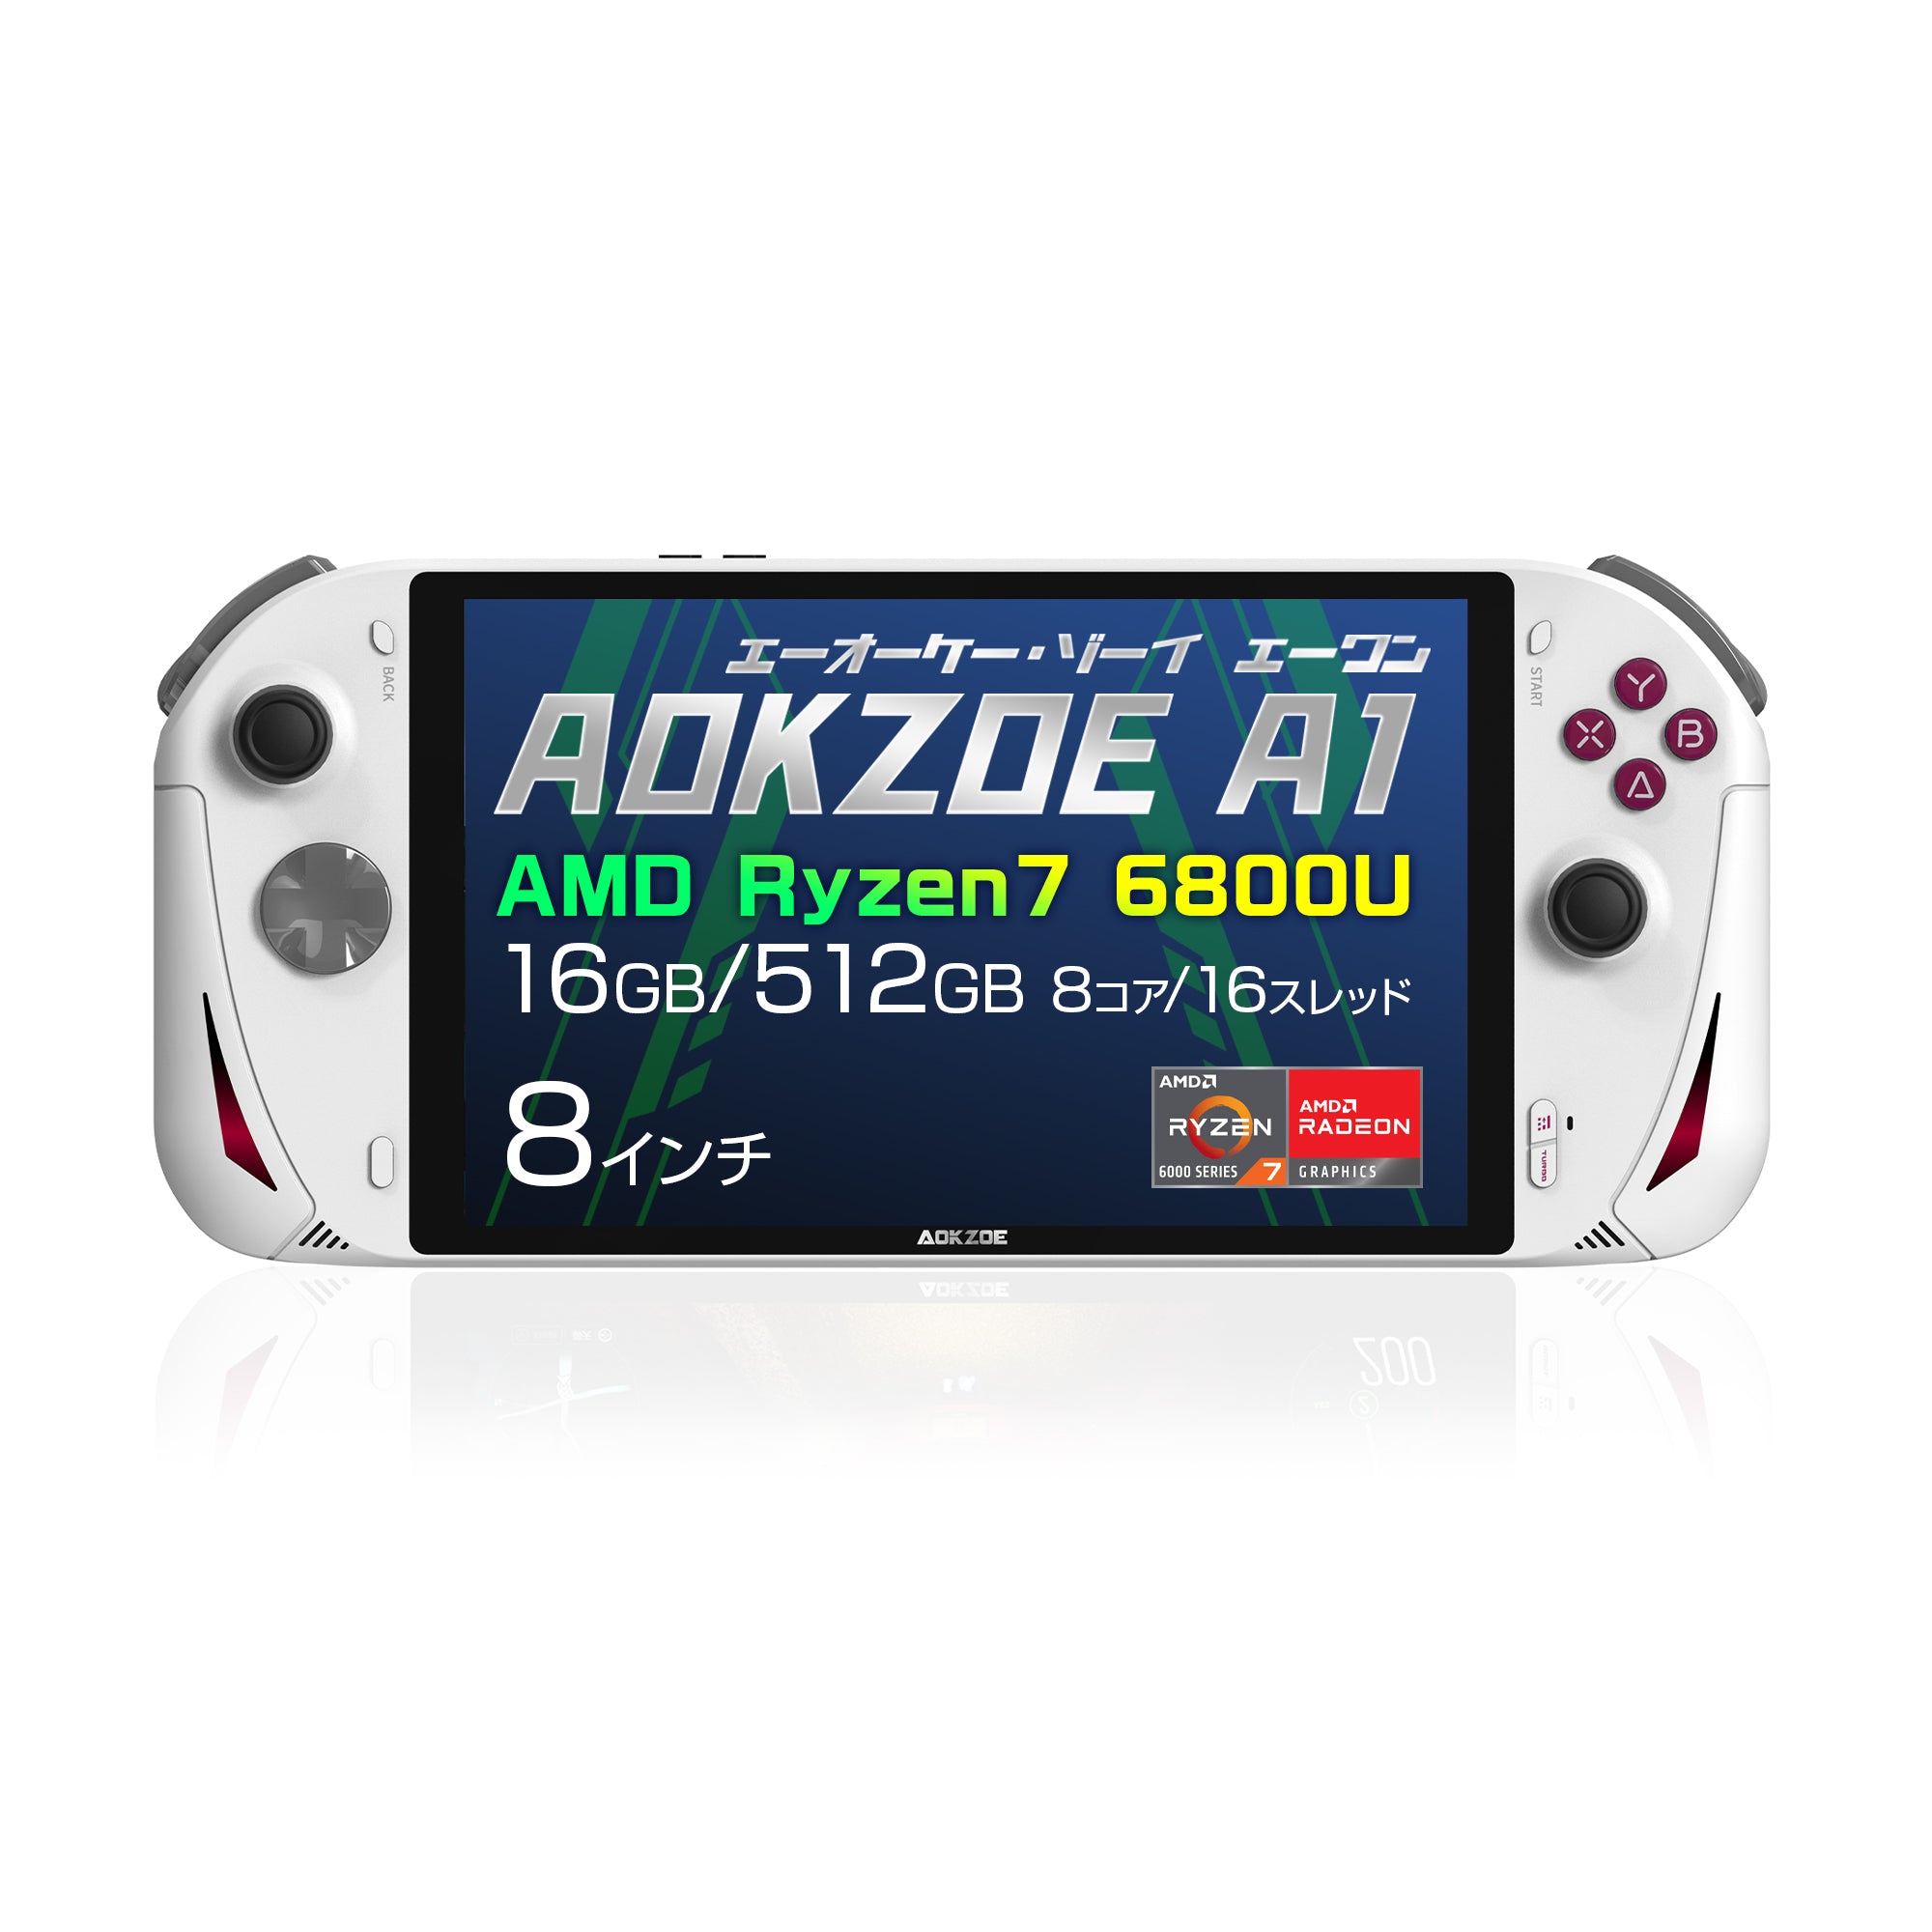 AOKZOE A1 ルナホワイト Ryzen7 6800U/16GB/512GB